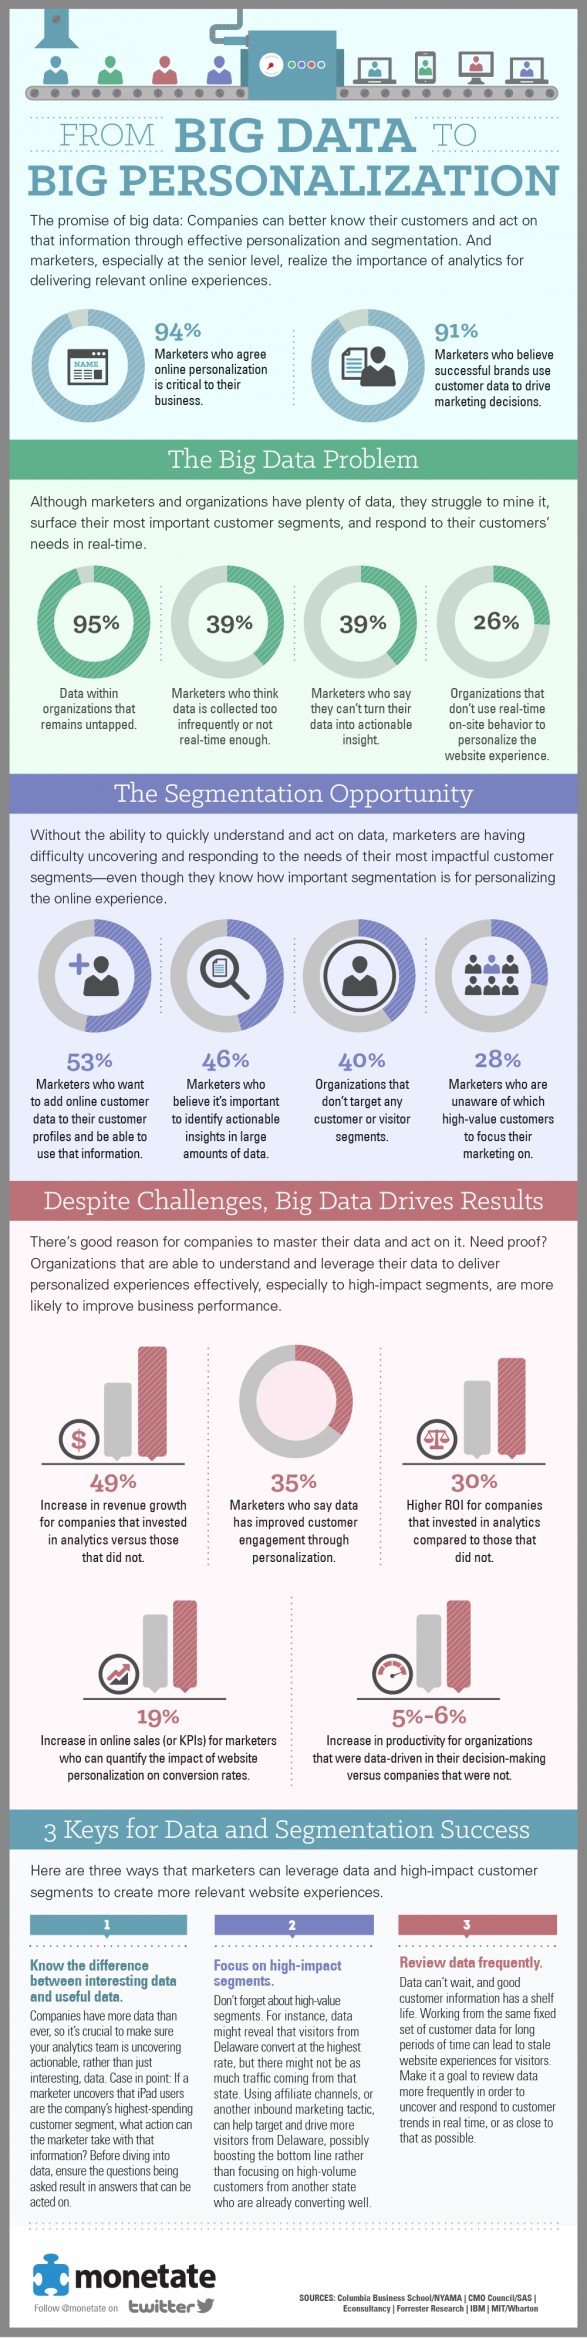 big-data-to-big-personalization-infographic